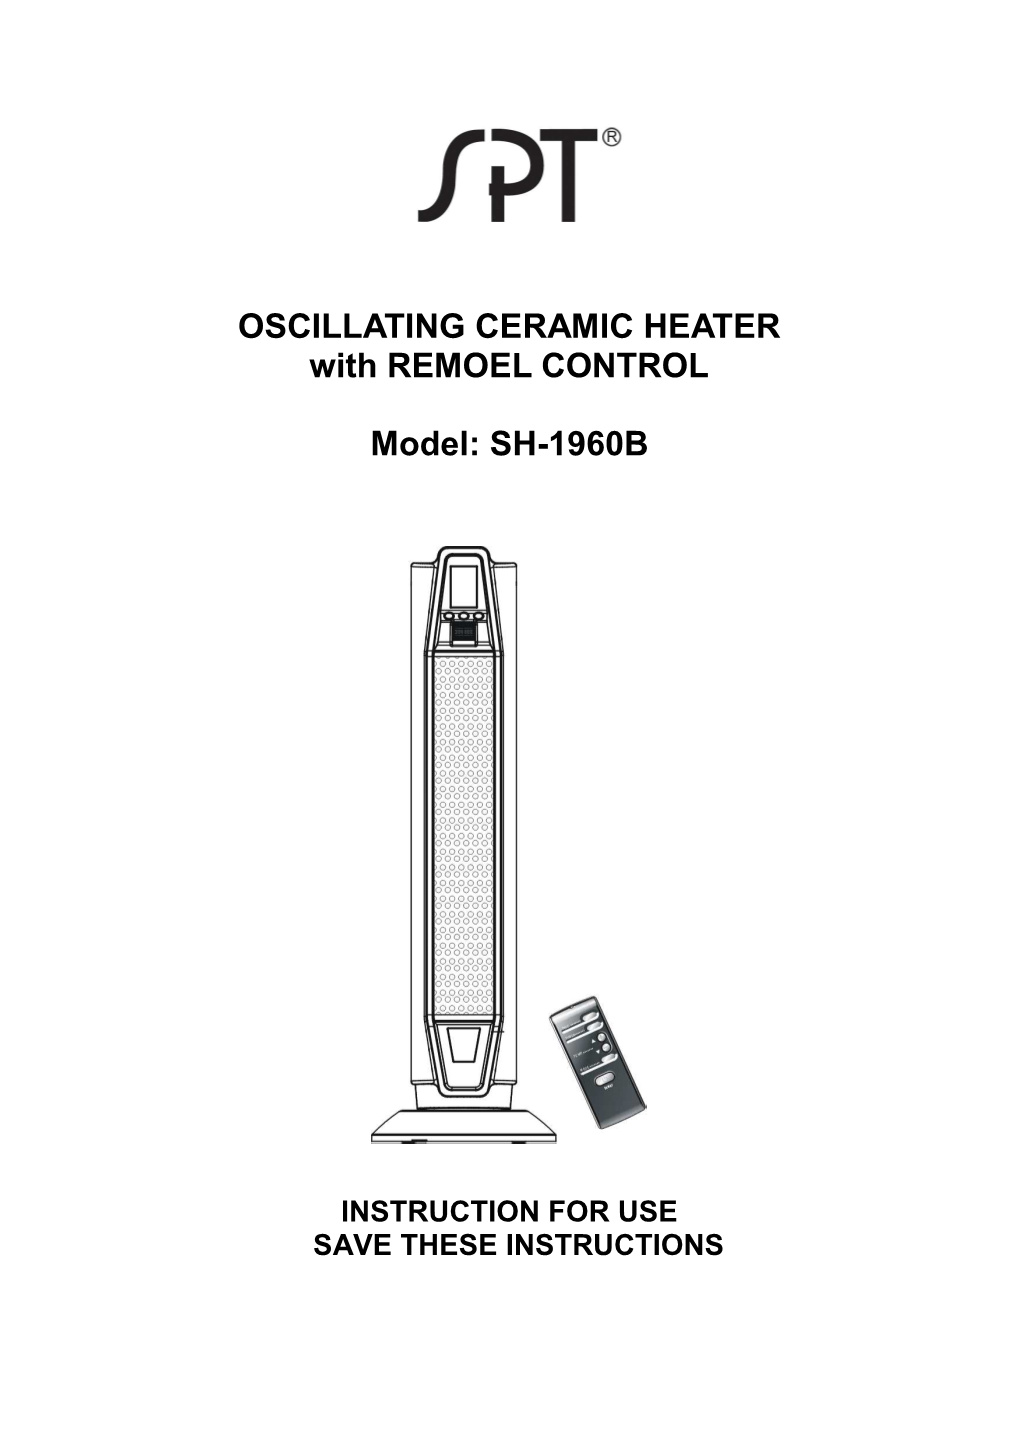 OSCILLATING CERAMIC HEATER with REMOEL CONTROL Model: SH-1960B